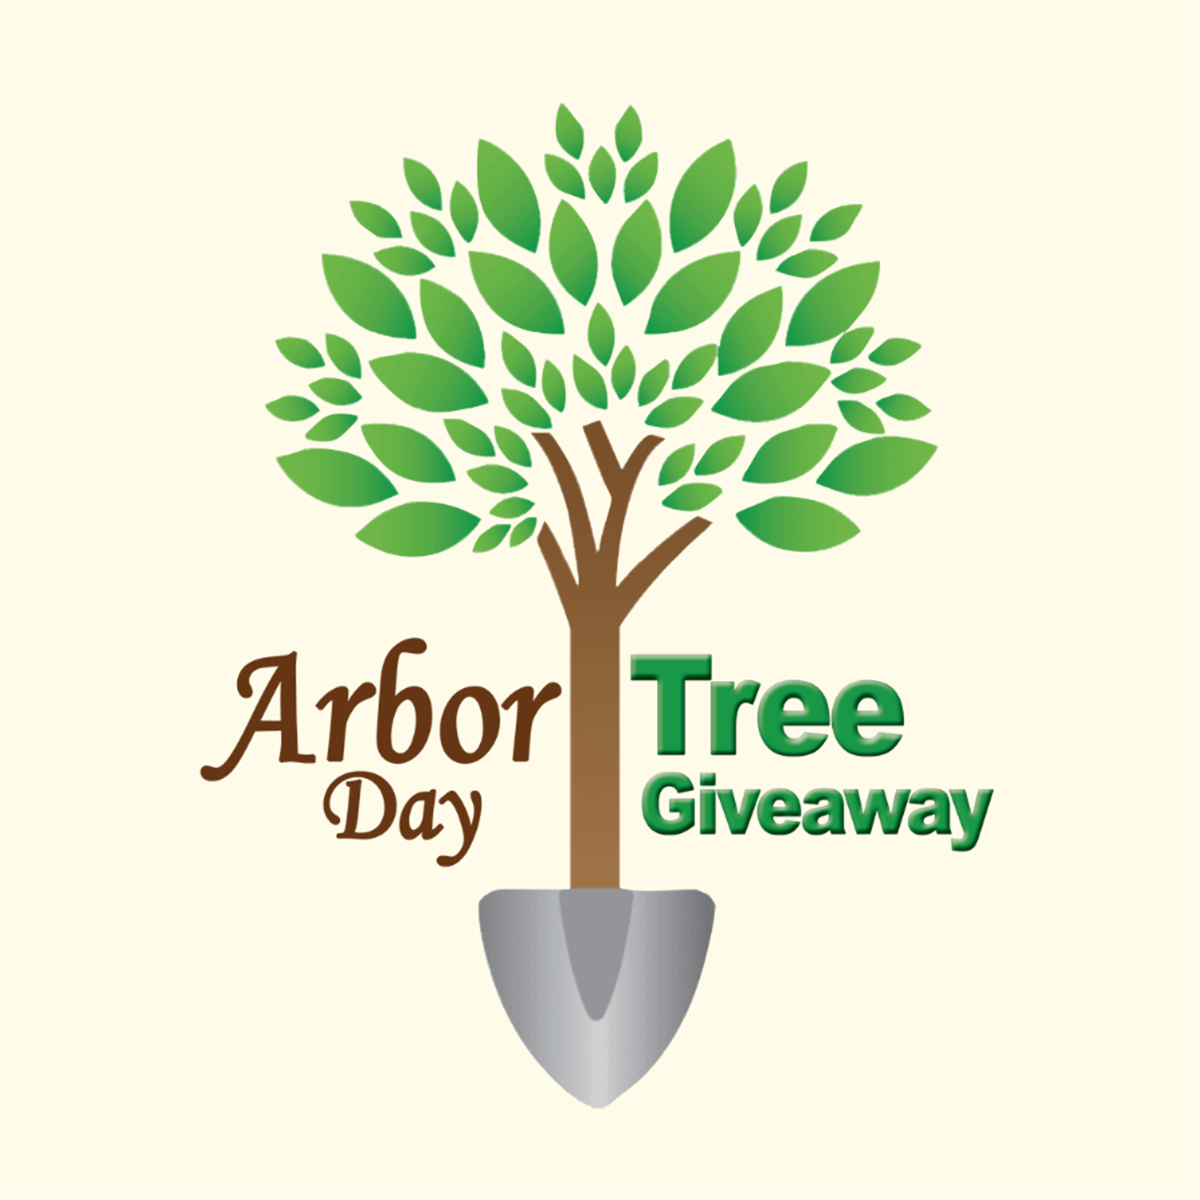 Arbor Day Tree Giveaway City of Dunedin, FL